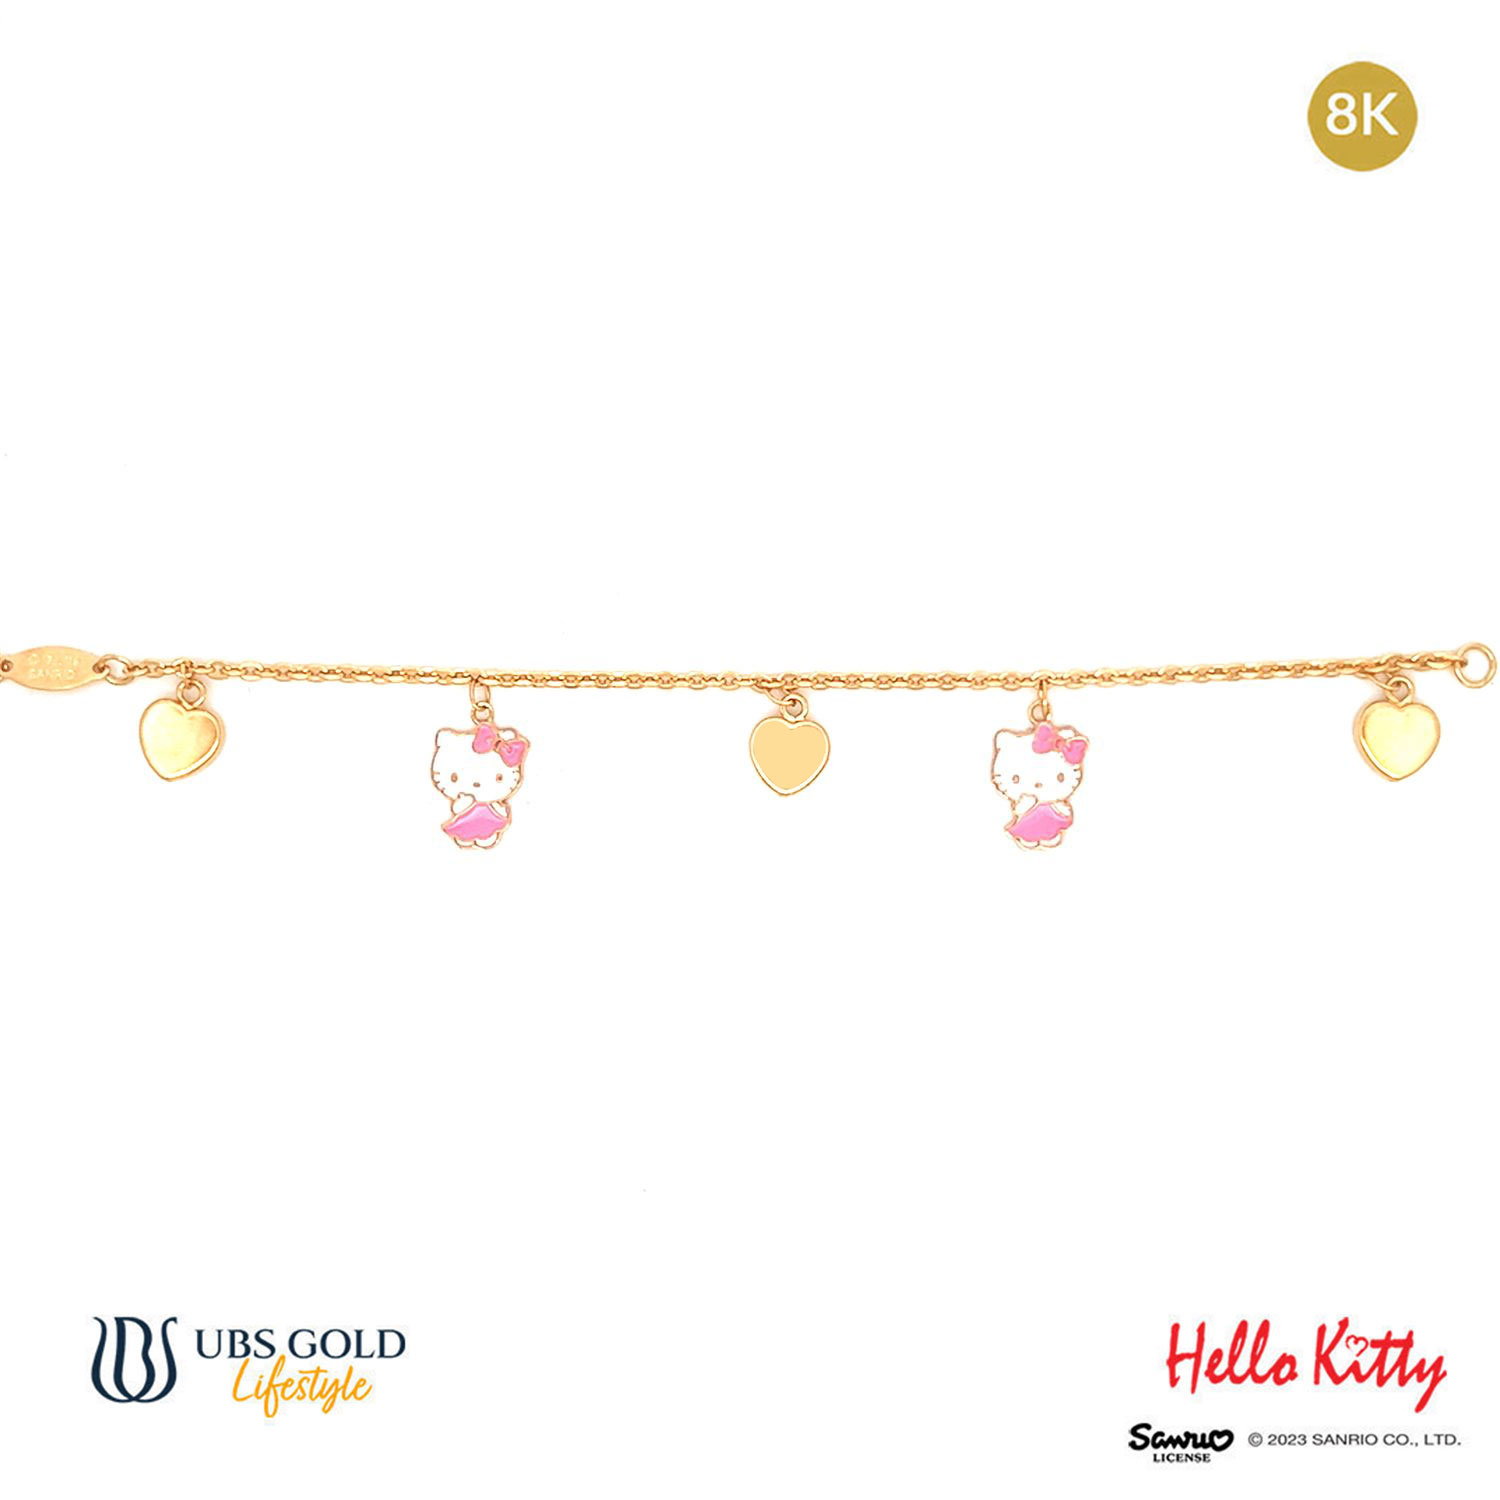 UBS Gelang Emas Anak Sanrio Hello Kitty - Hgz0007 - 8K